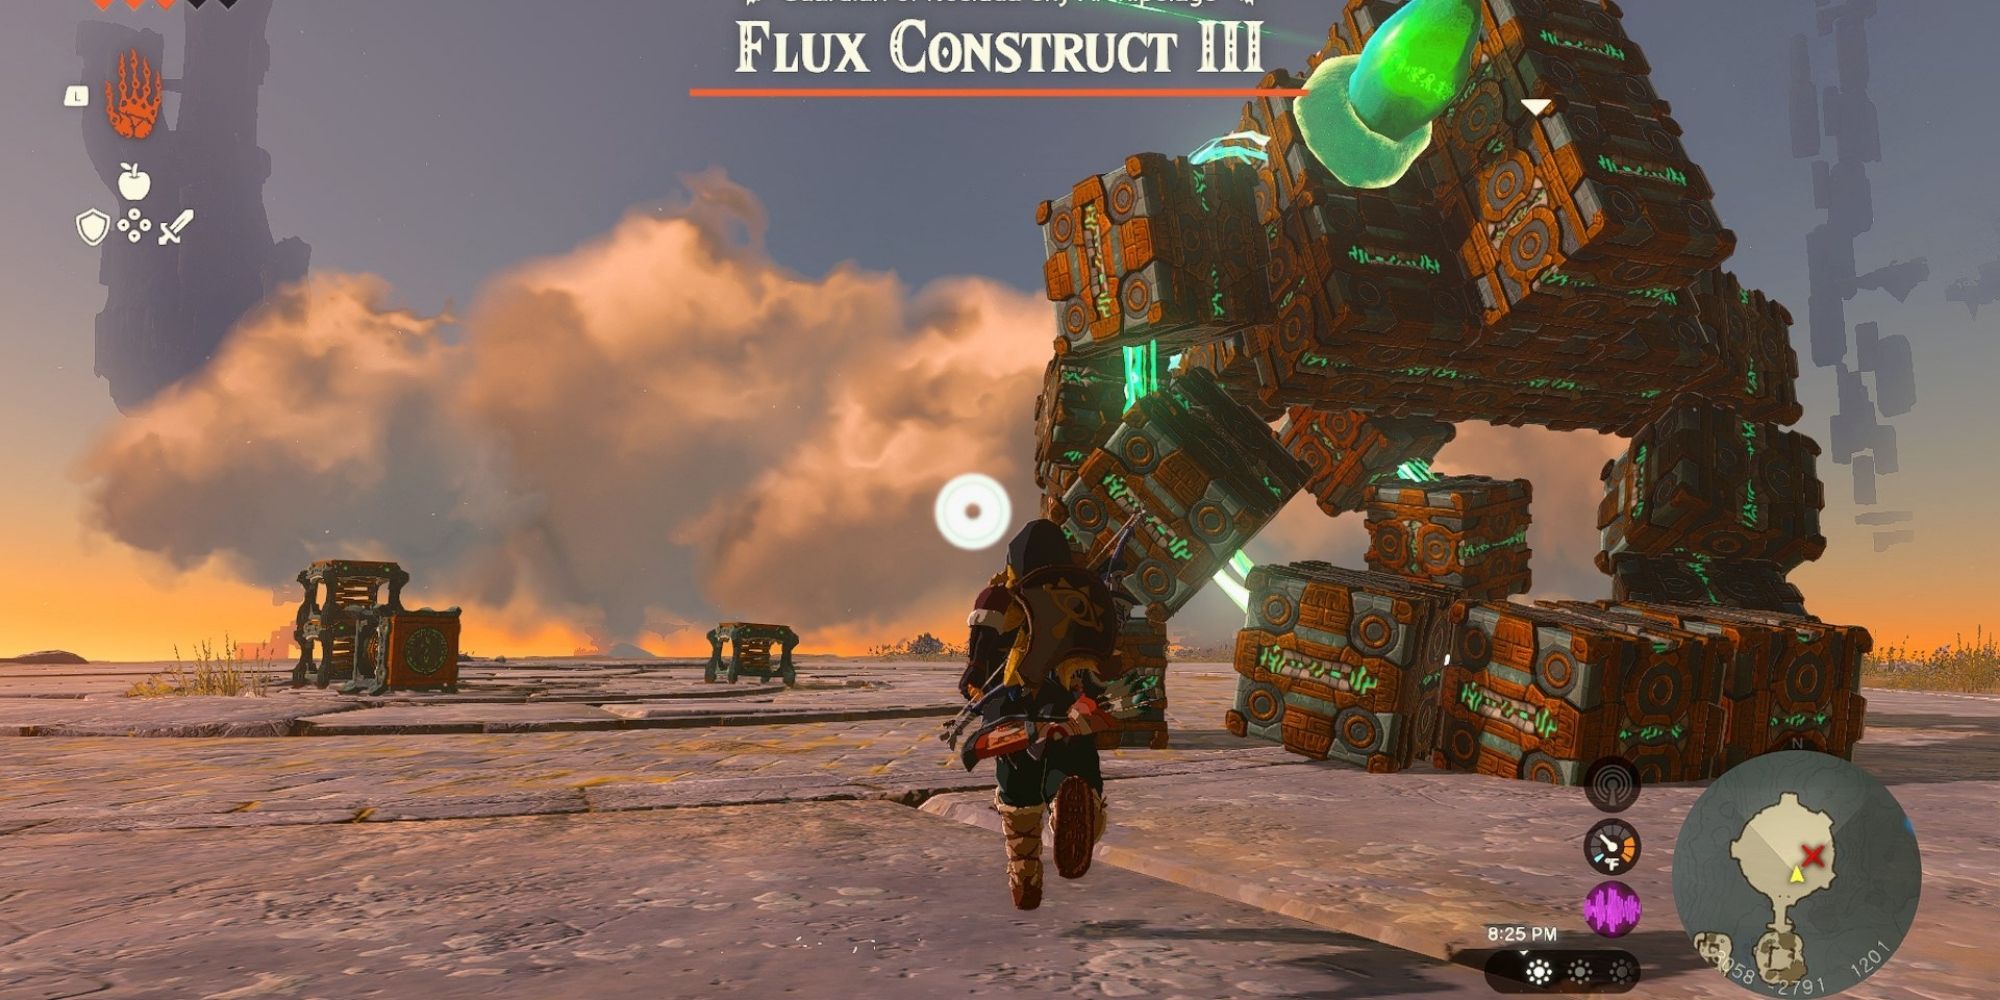 Link fighting a flux construct III in robot form totk